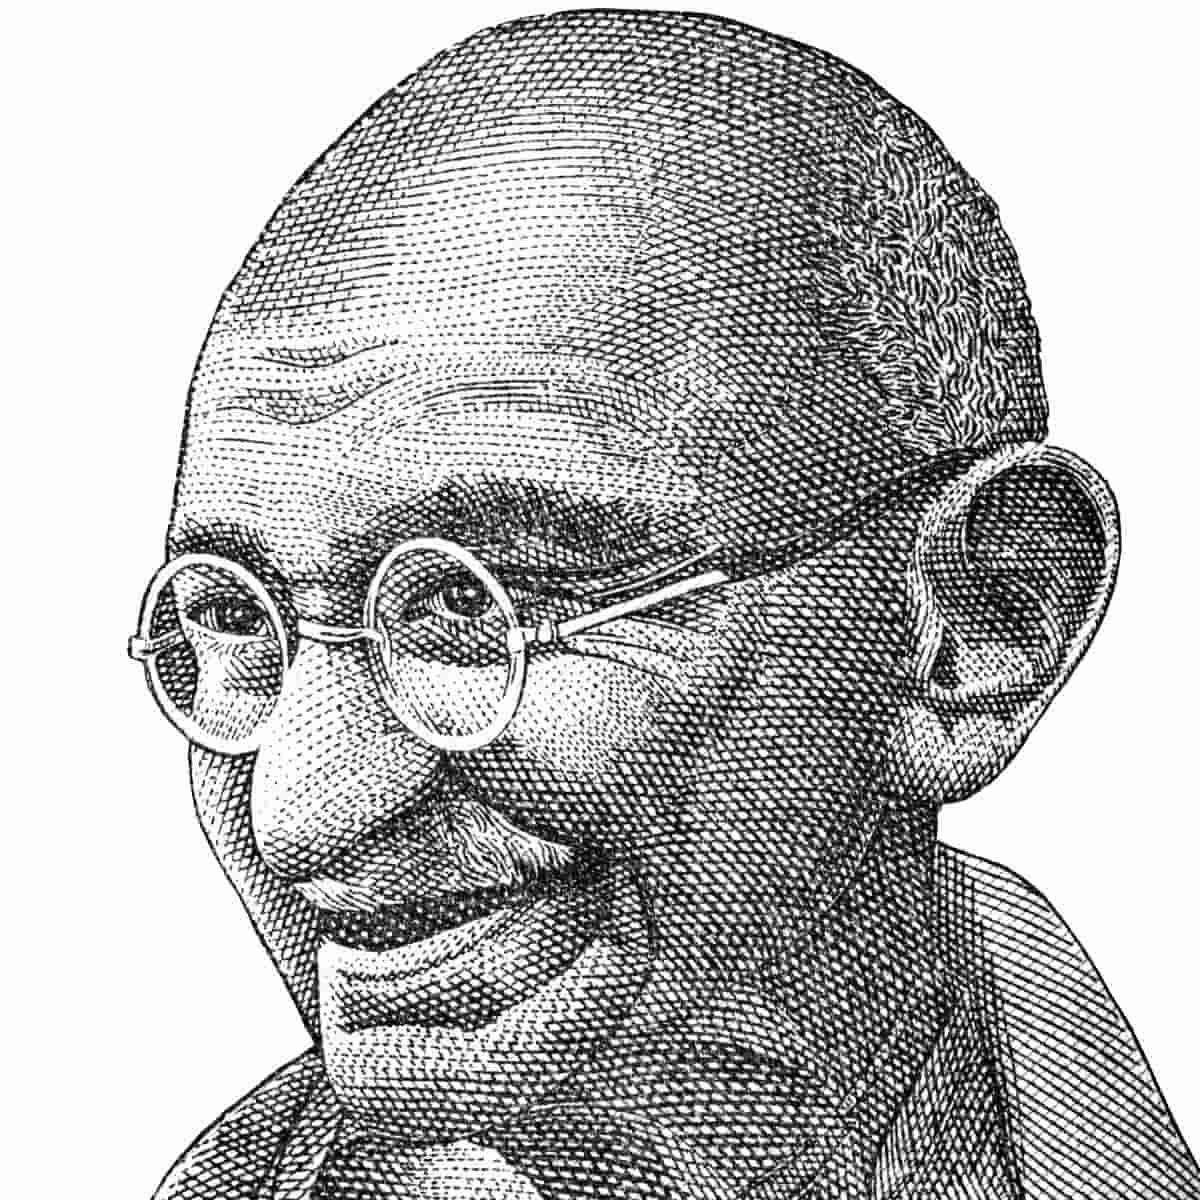 Drawing of Mahatma Gandhi's face